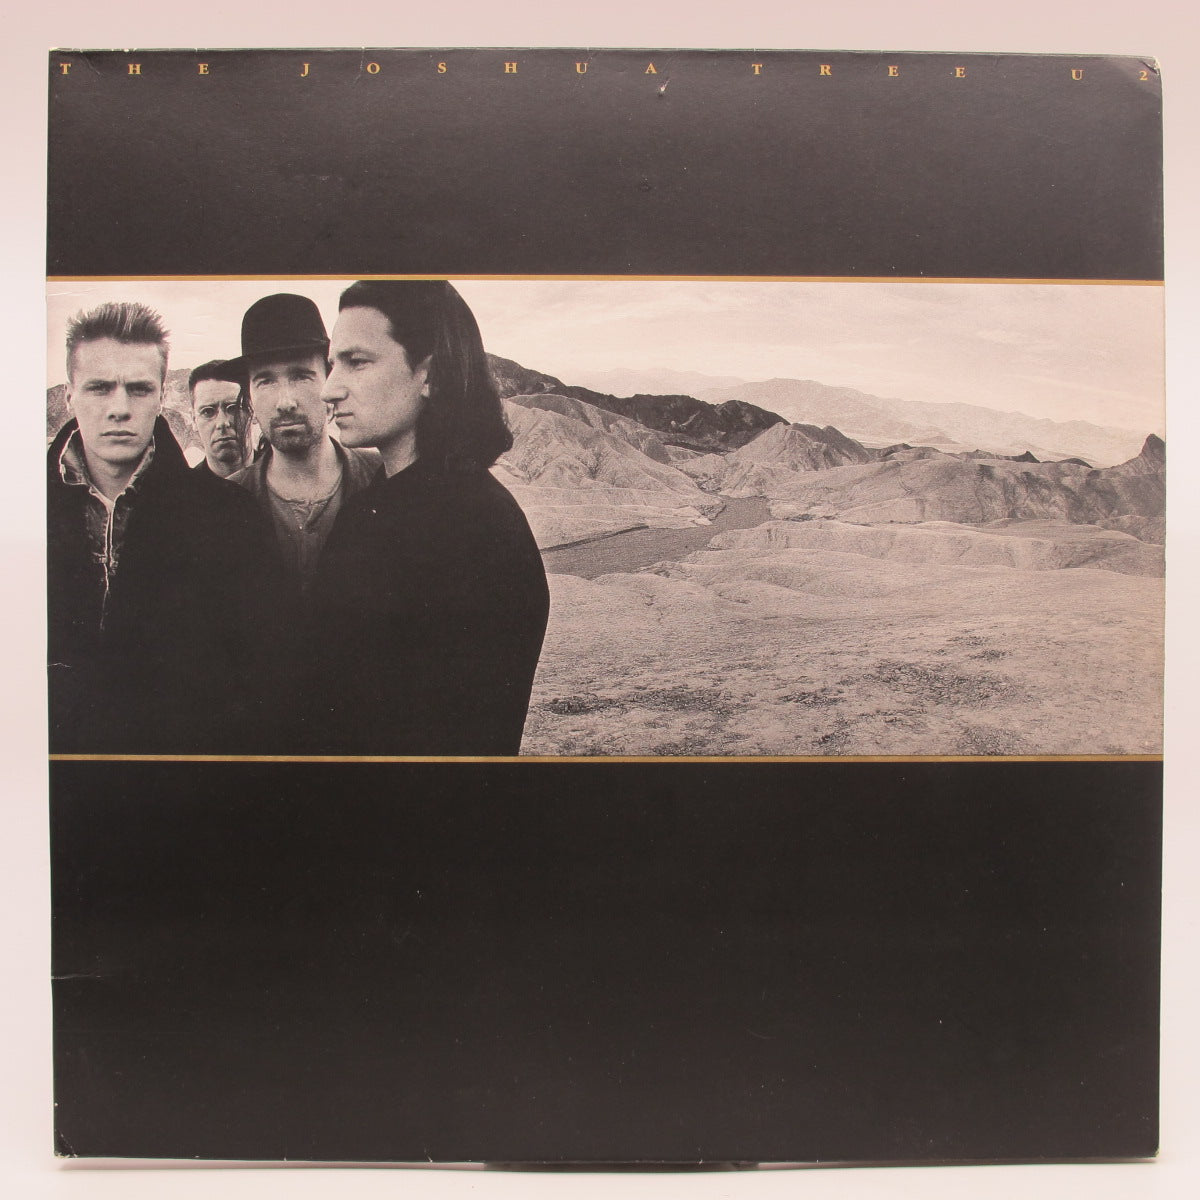 U2 - The Joshua Tree (Notuð plata VG)